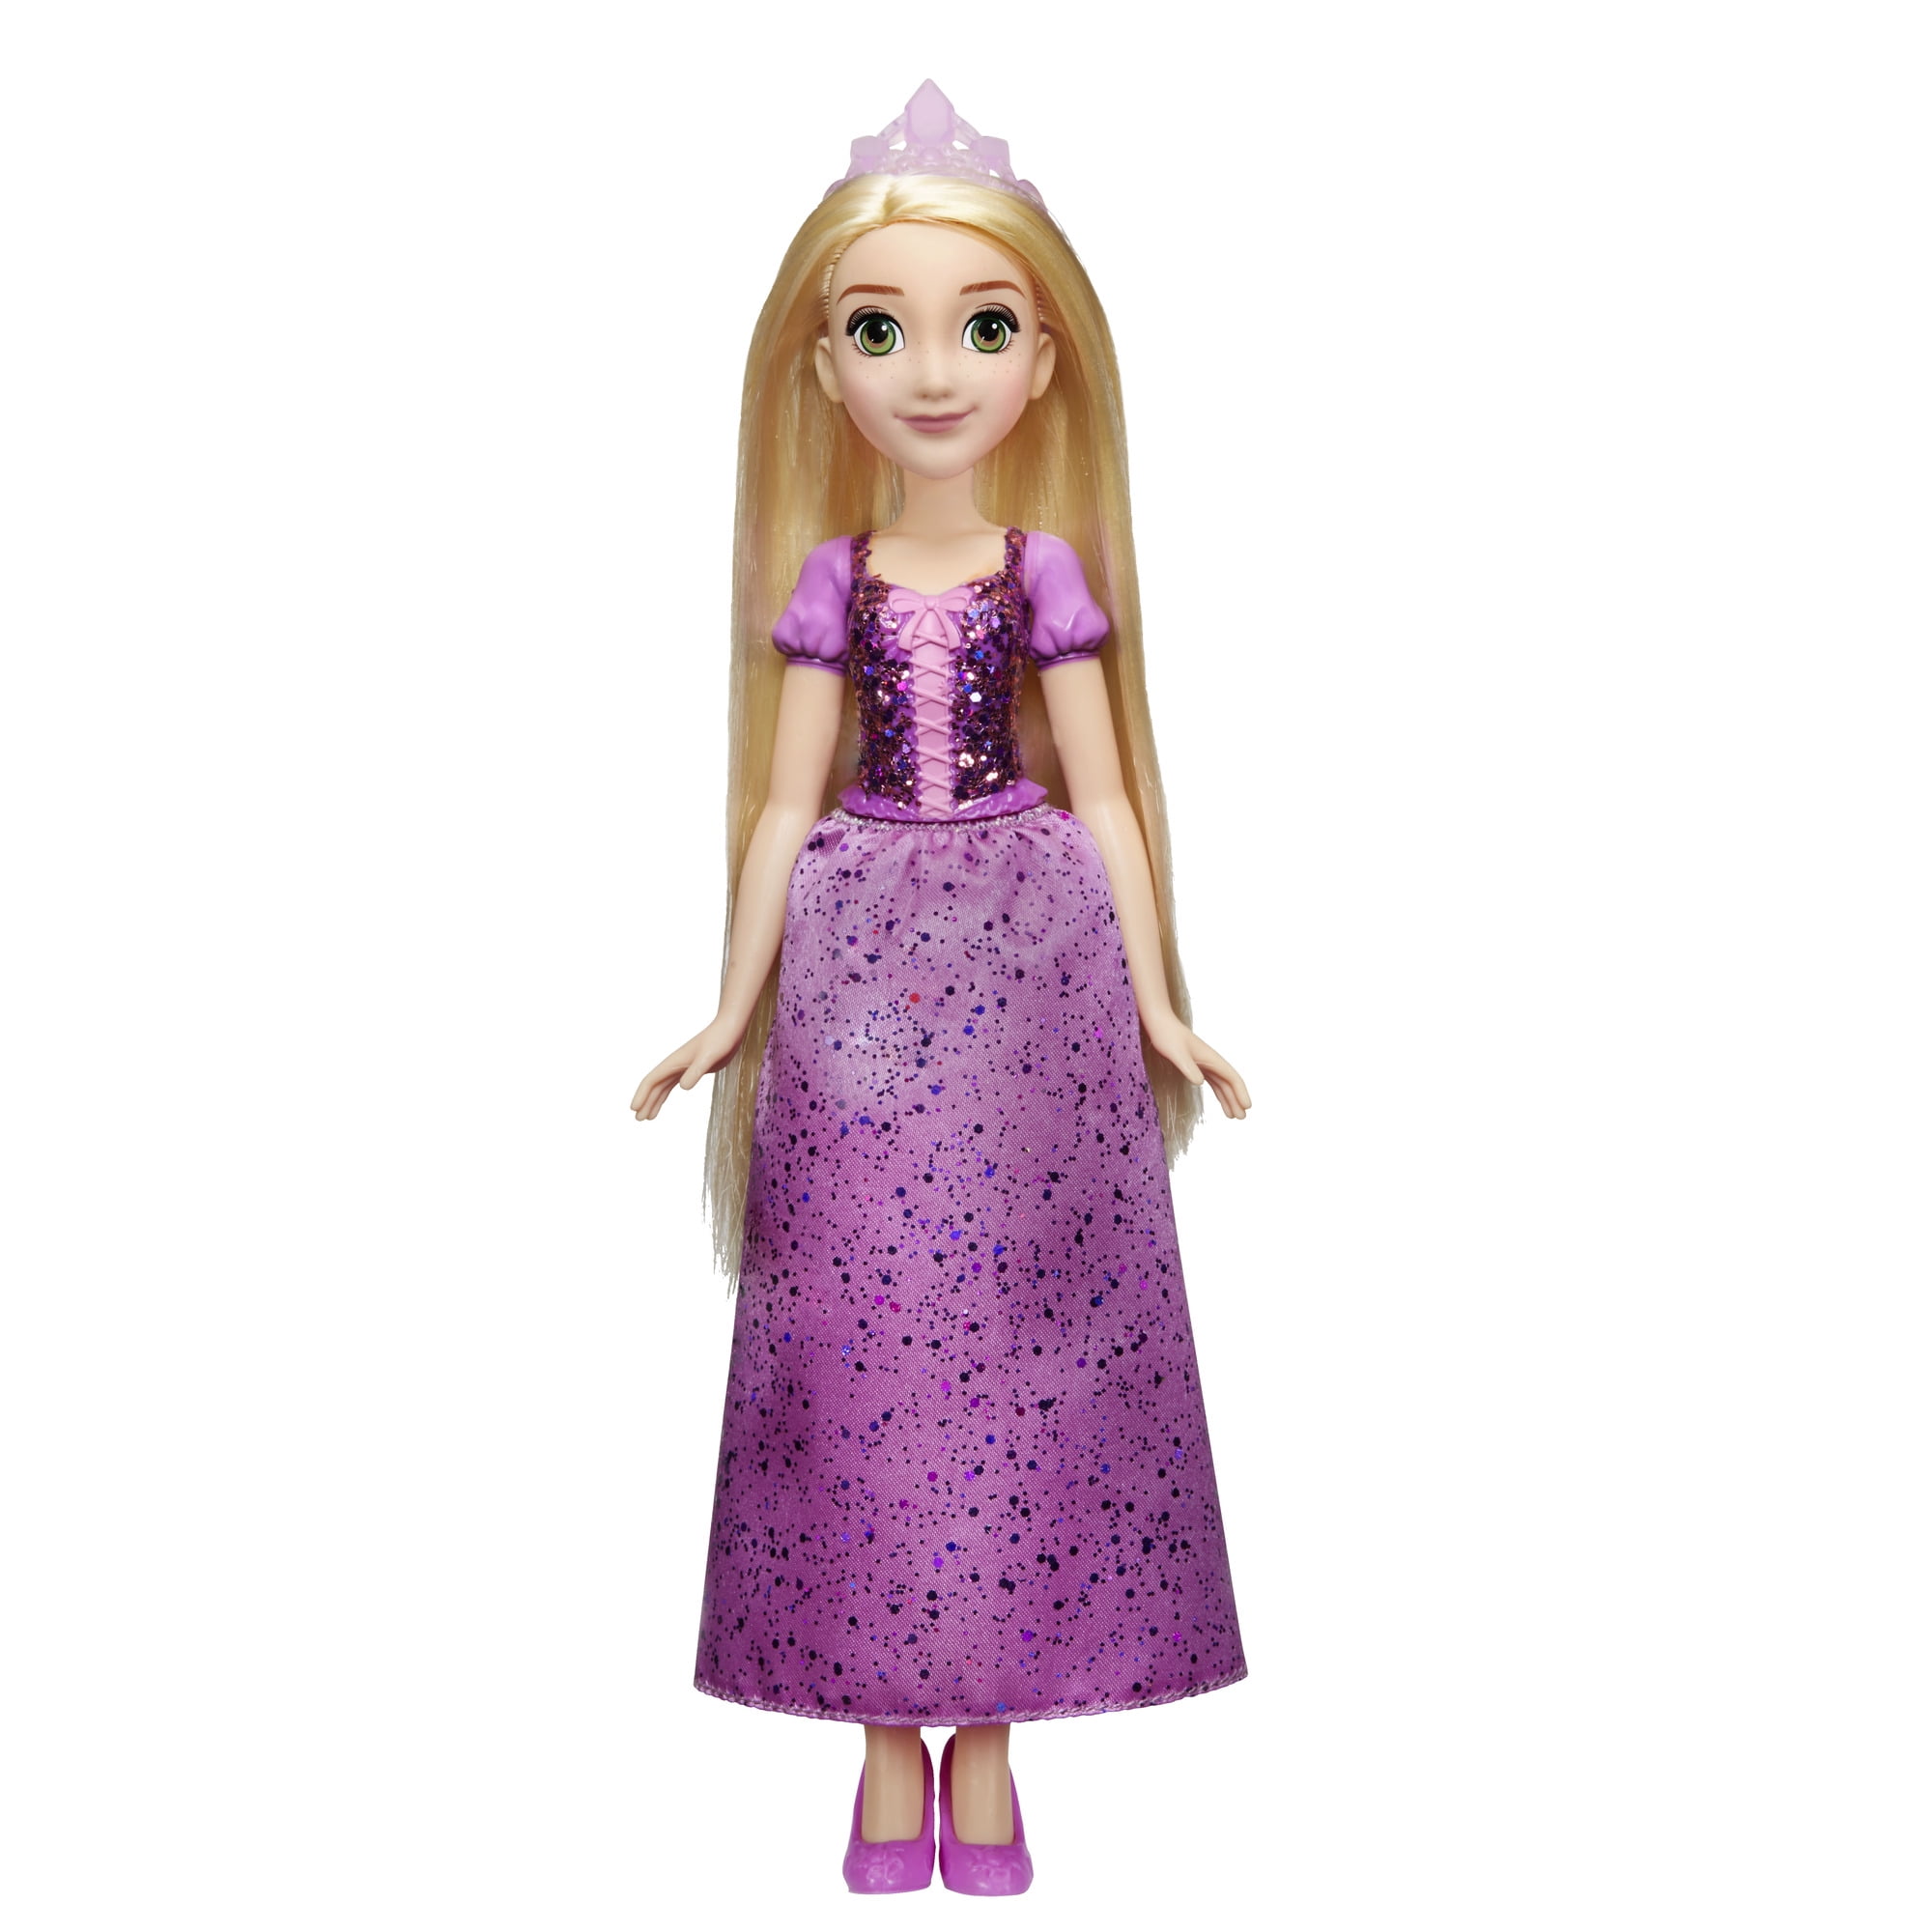 Disney Princess Rapunzel Fashion Doll 